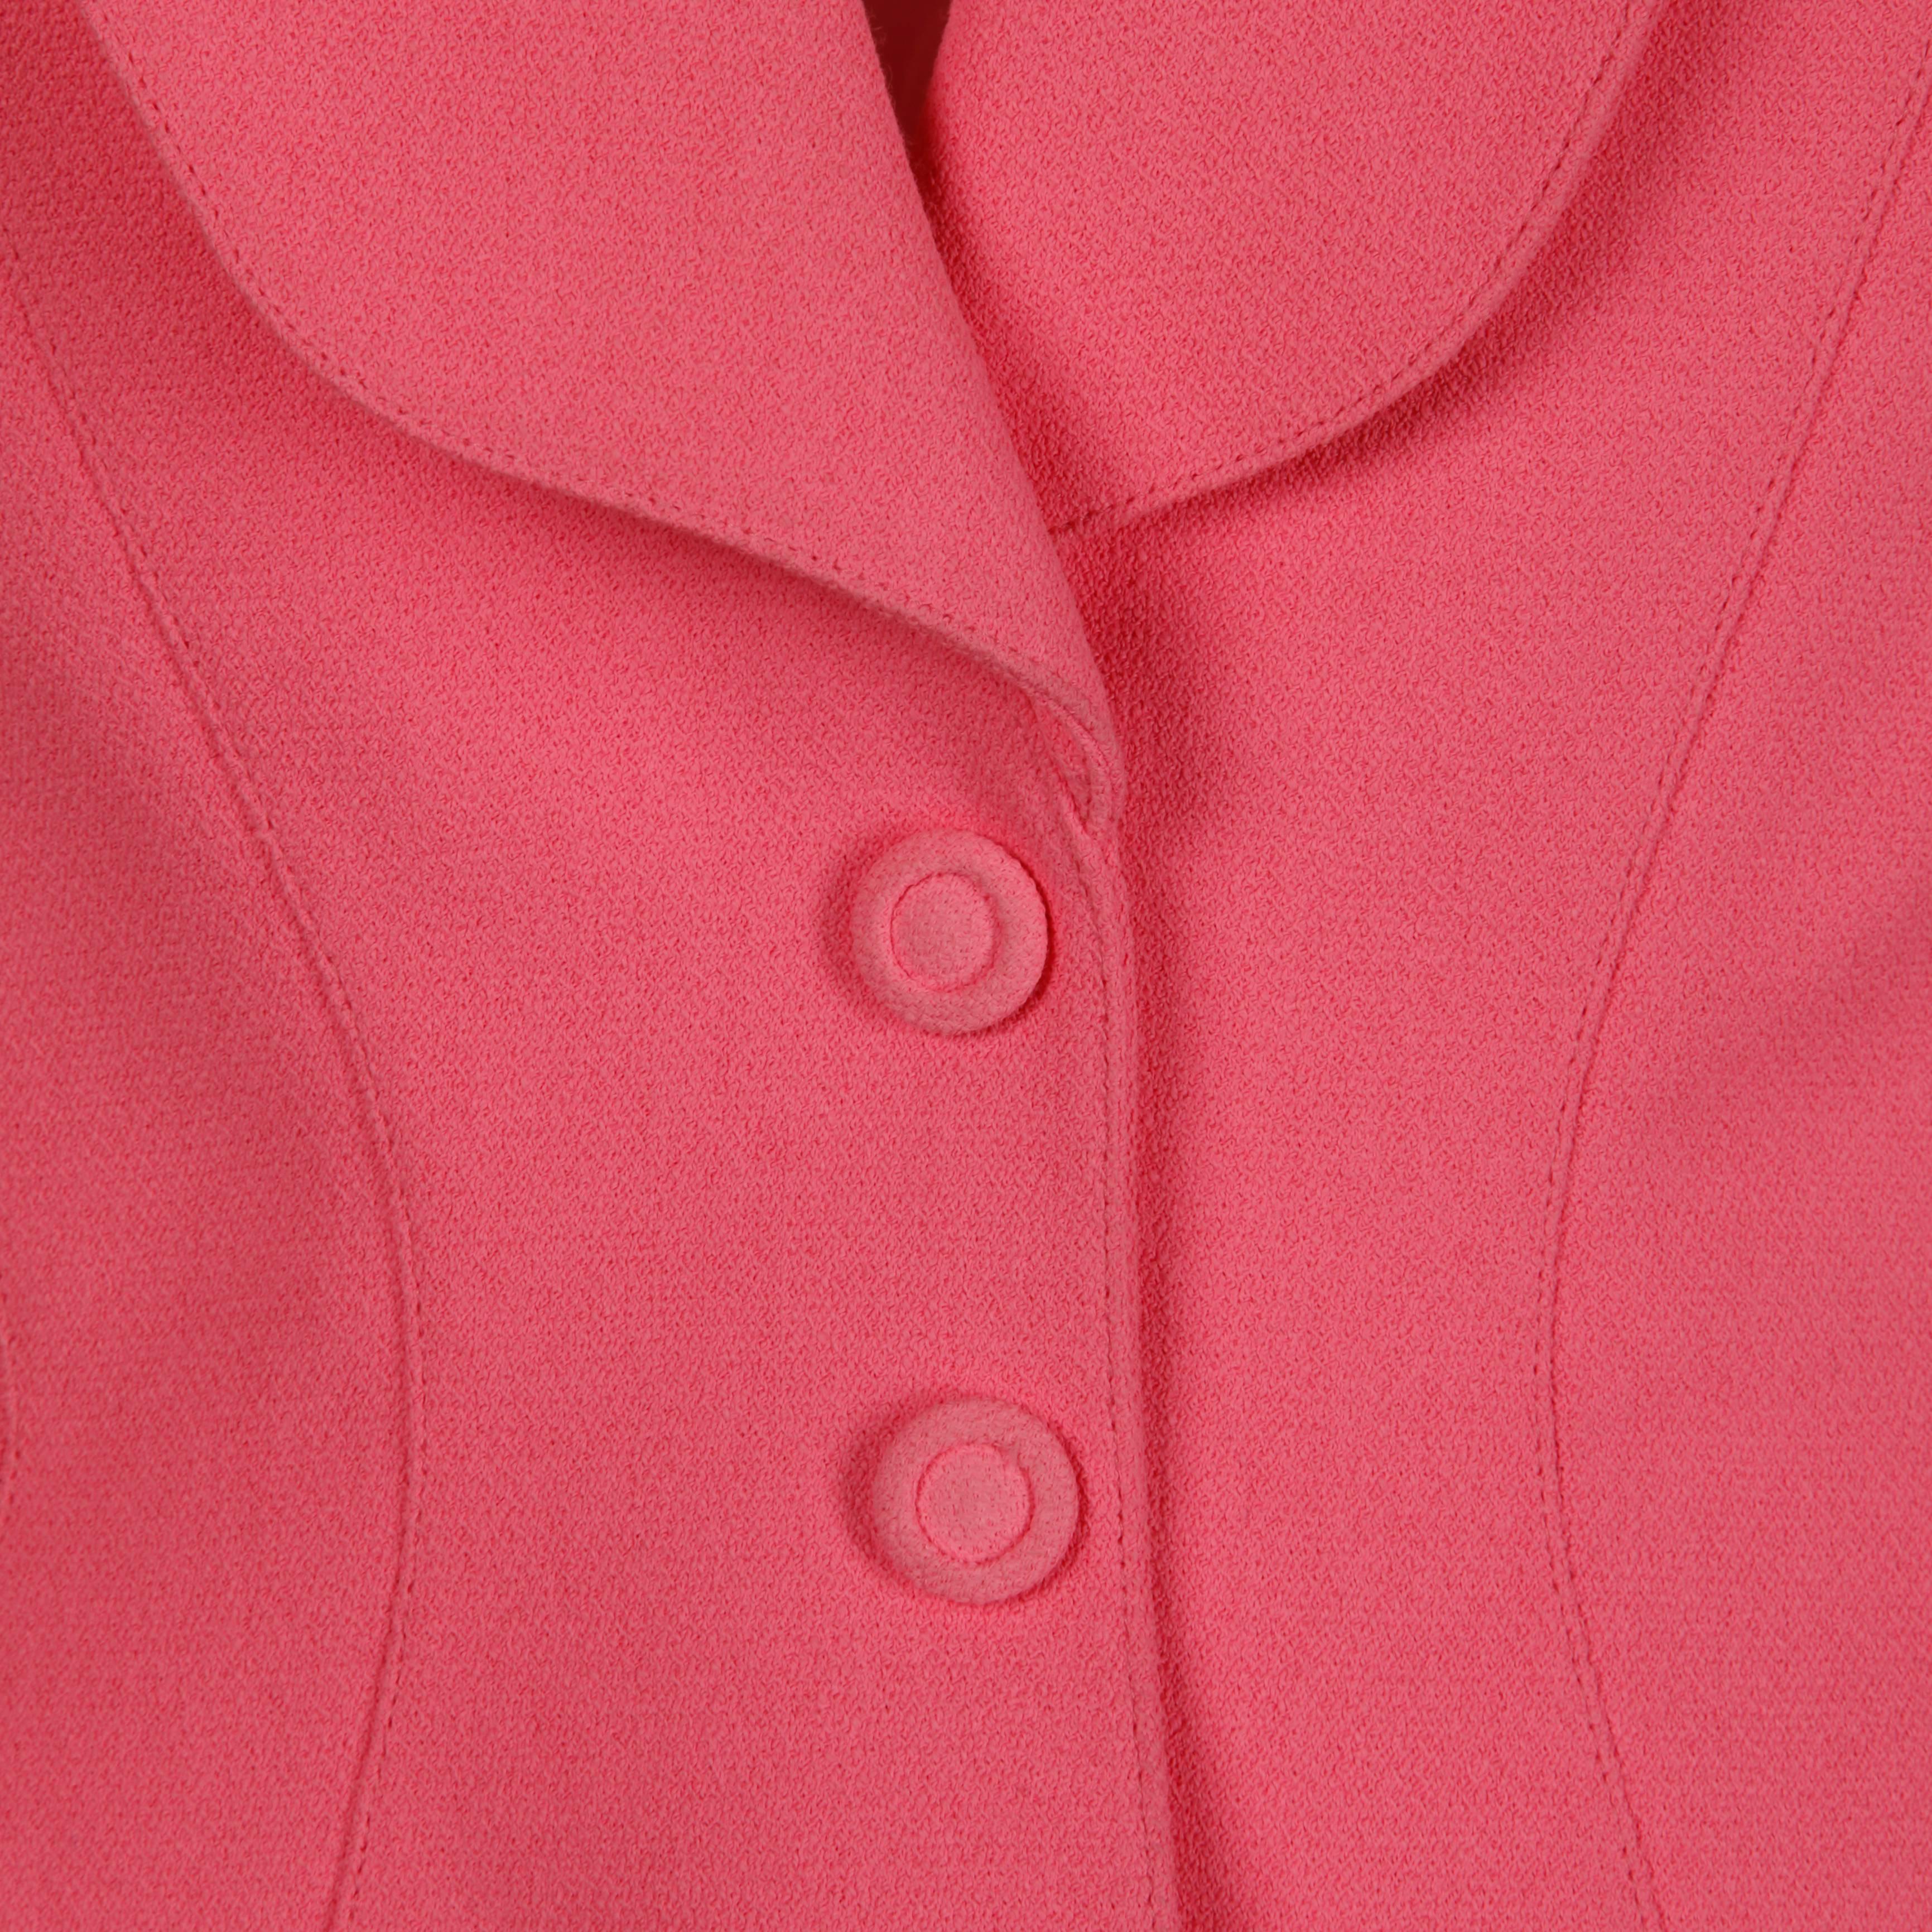 1980s Thierry Mugler Vintage Bubblegum Pink Jacket + Skirt Suit 2-Piece Ensemble 1